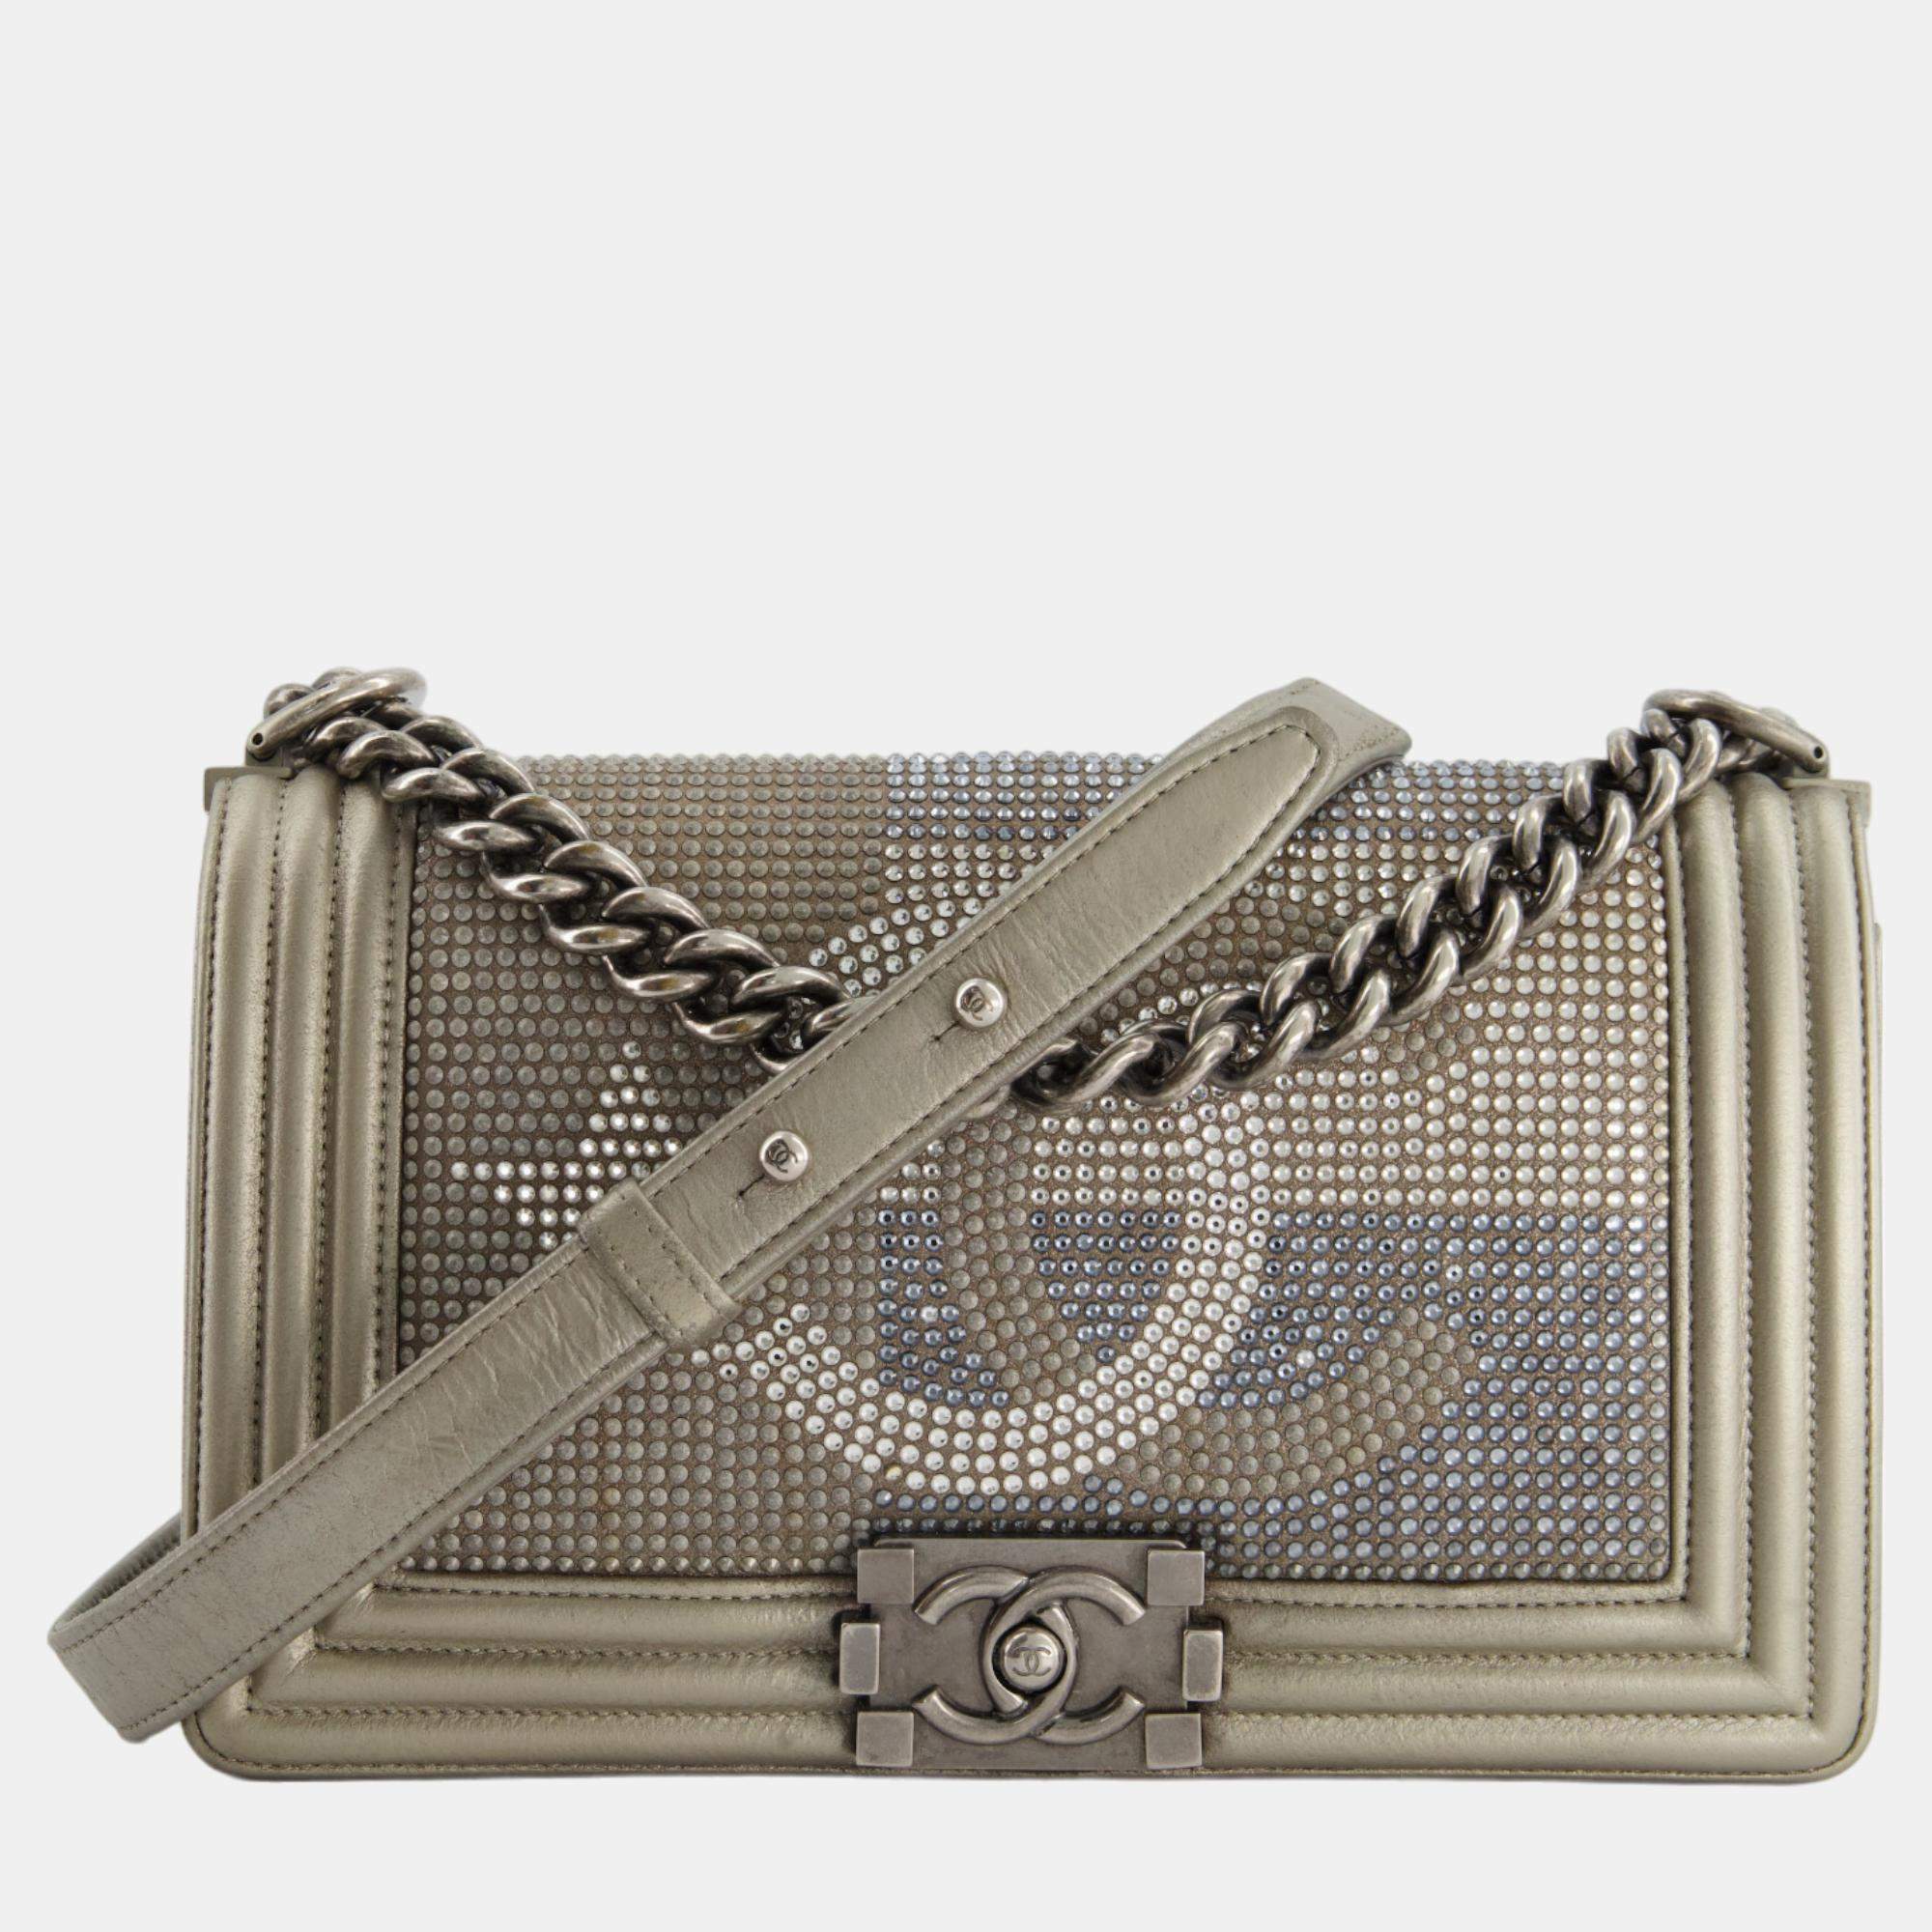 Chanel Medium Boy Bag in Gold Metallic Sequin CC Star Print with Silver Hardware